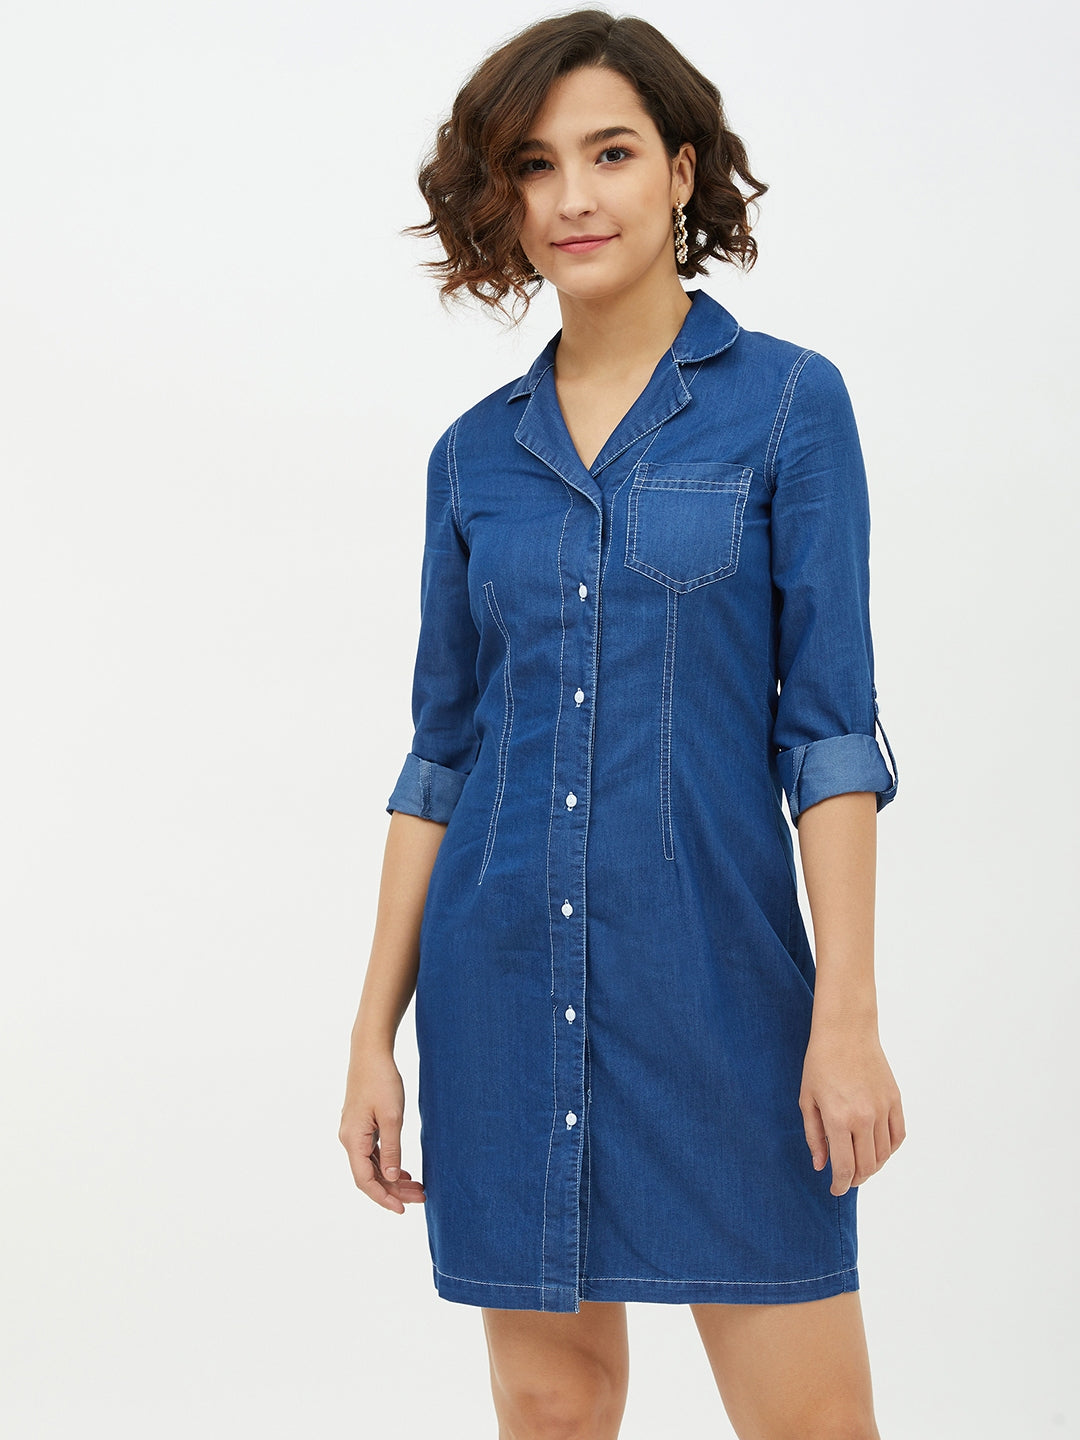 Women's Denim Lapel Collar Shirt Dress - StyleStone